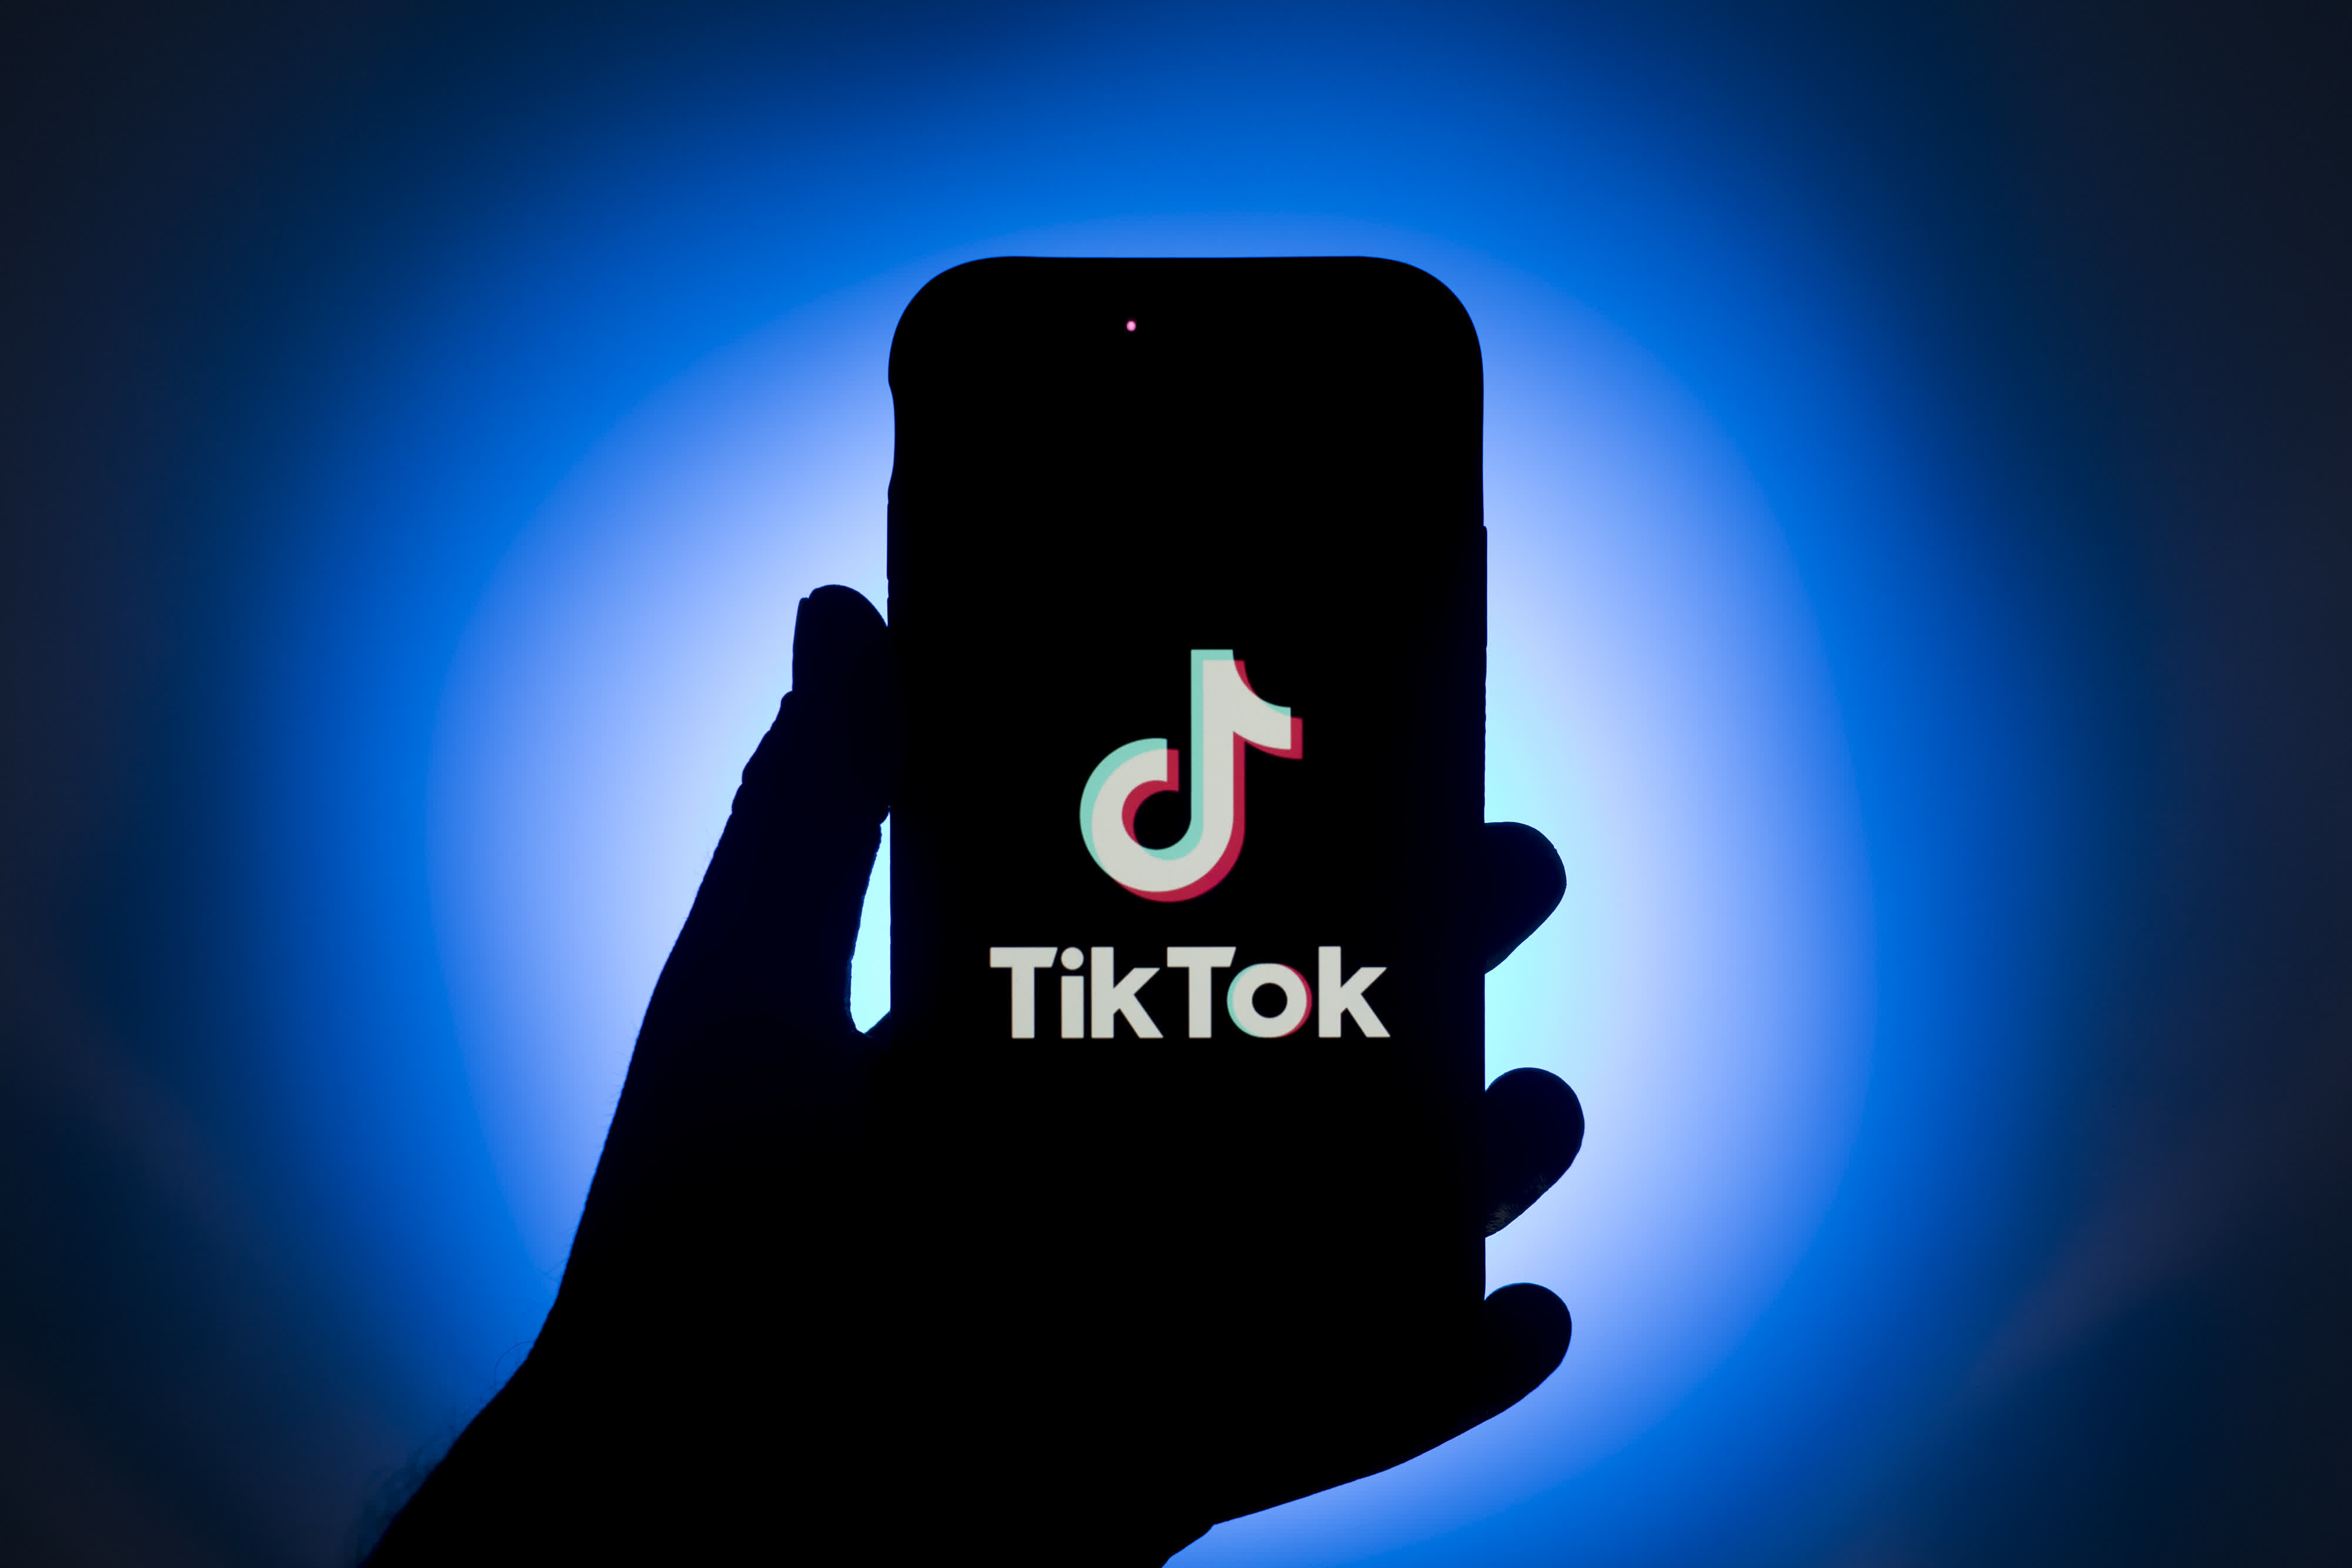 FCC commissioner: The US government should ban TikTok